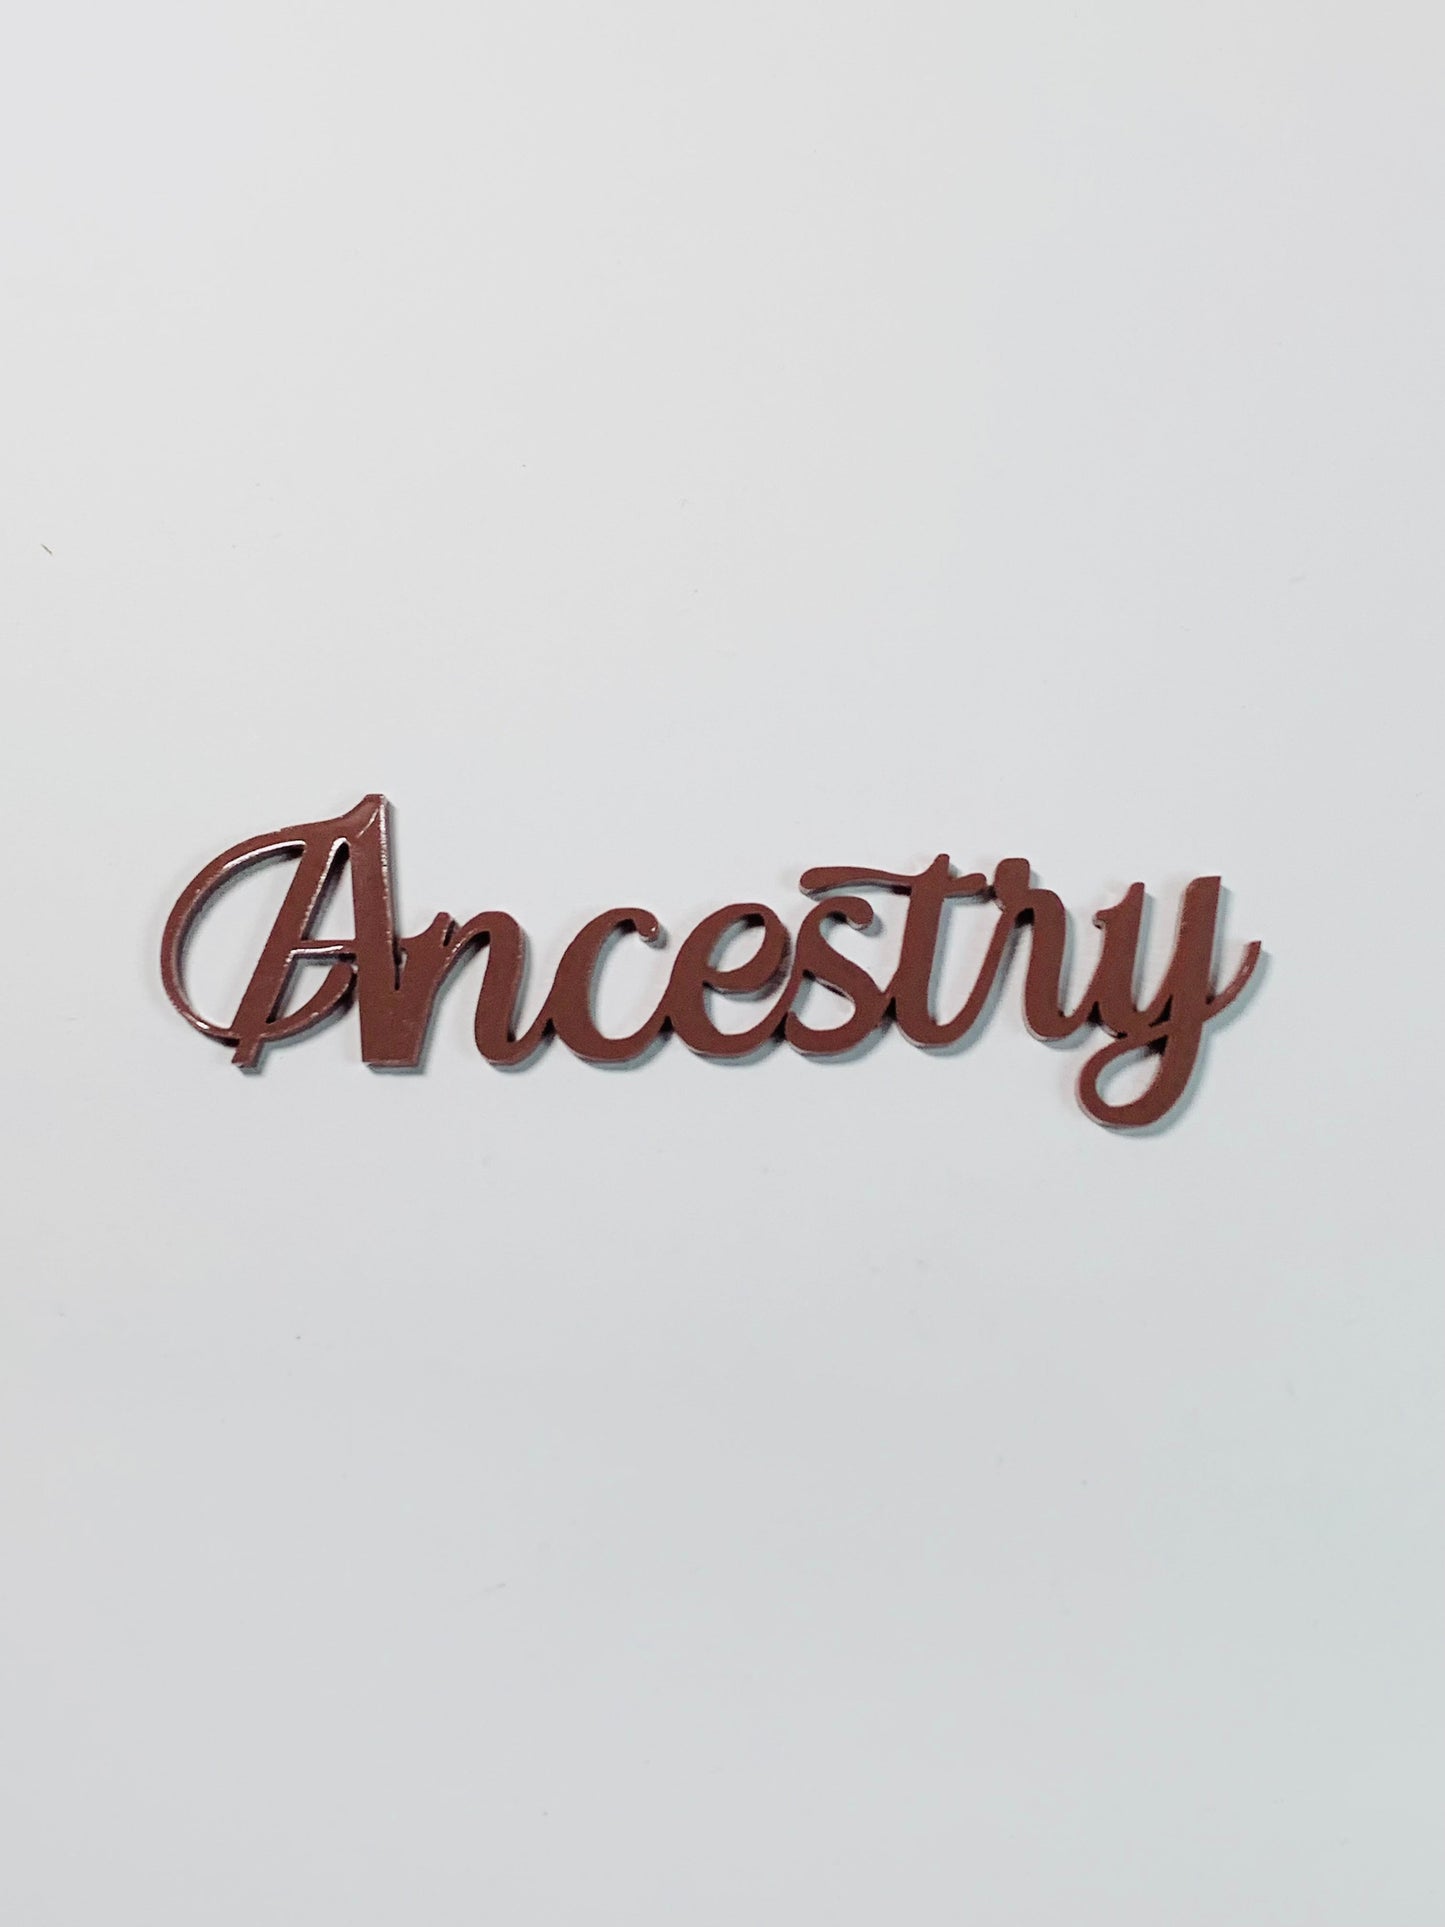 Ancestry - Creative Designs By Kari